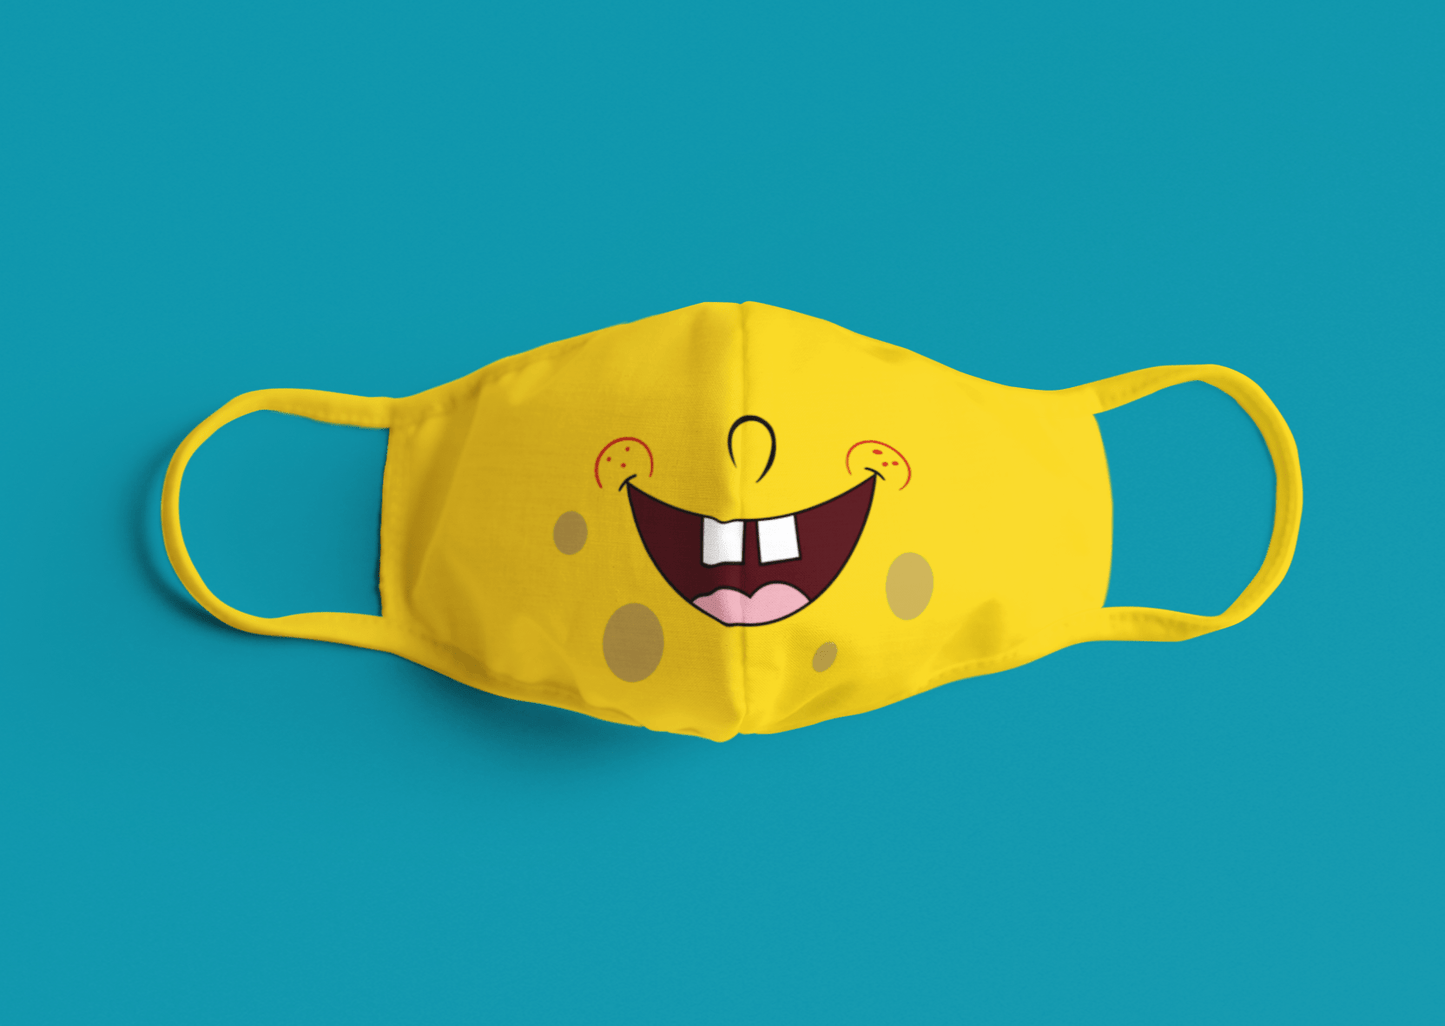 SpongeBob: Printed Tetra Shield Protection Mask